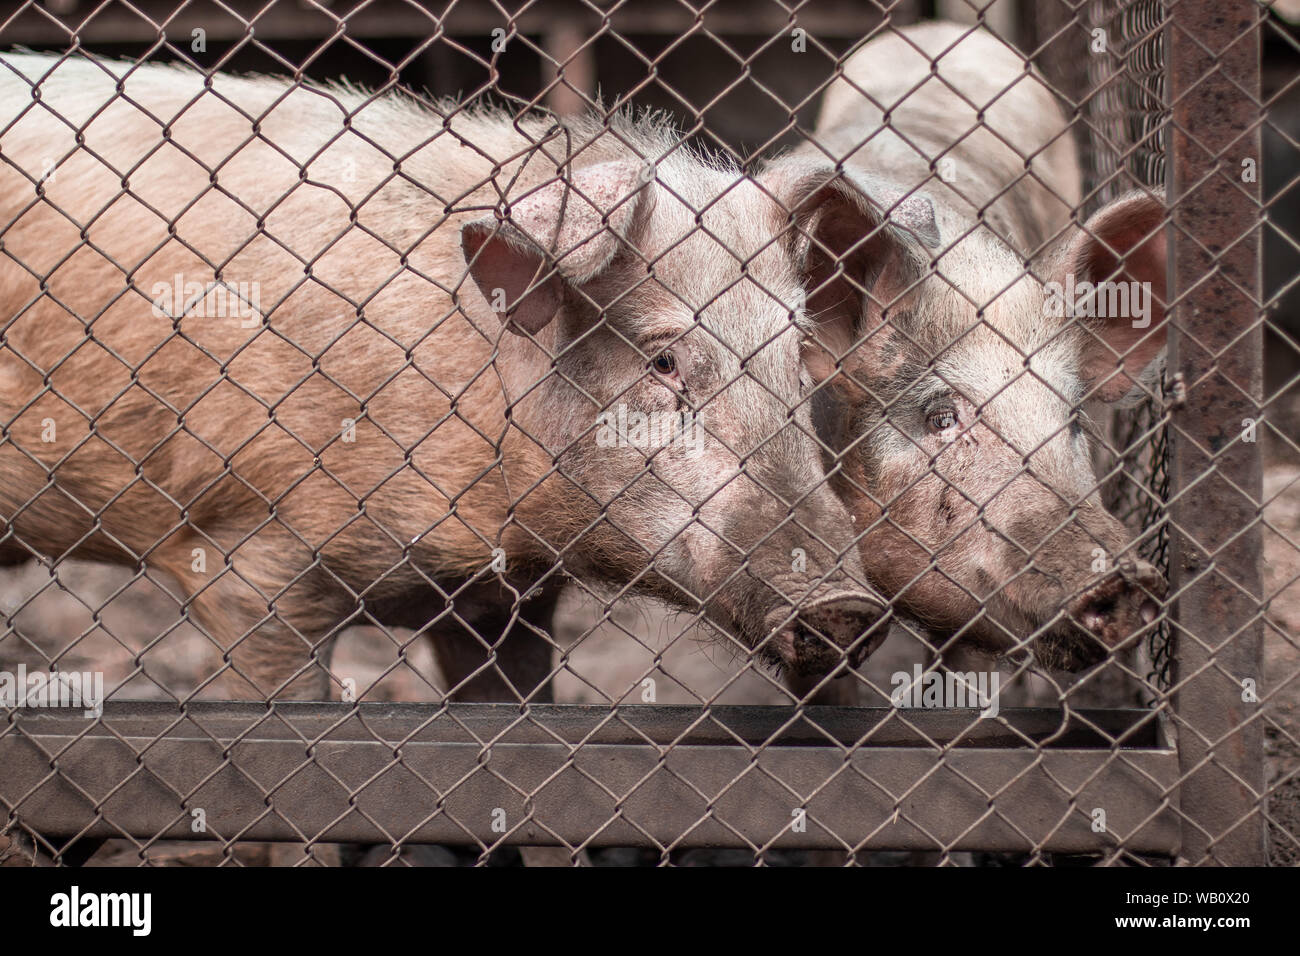 Meat industry. Pigs on the farm. Pig breeding, livestock raising Stock Photo